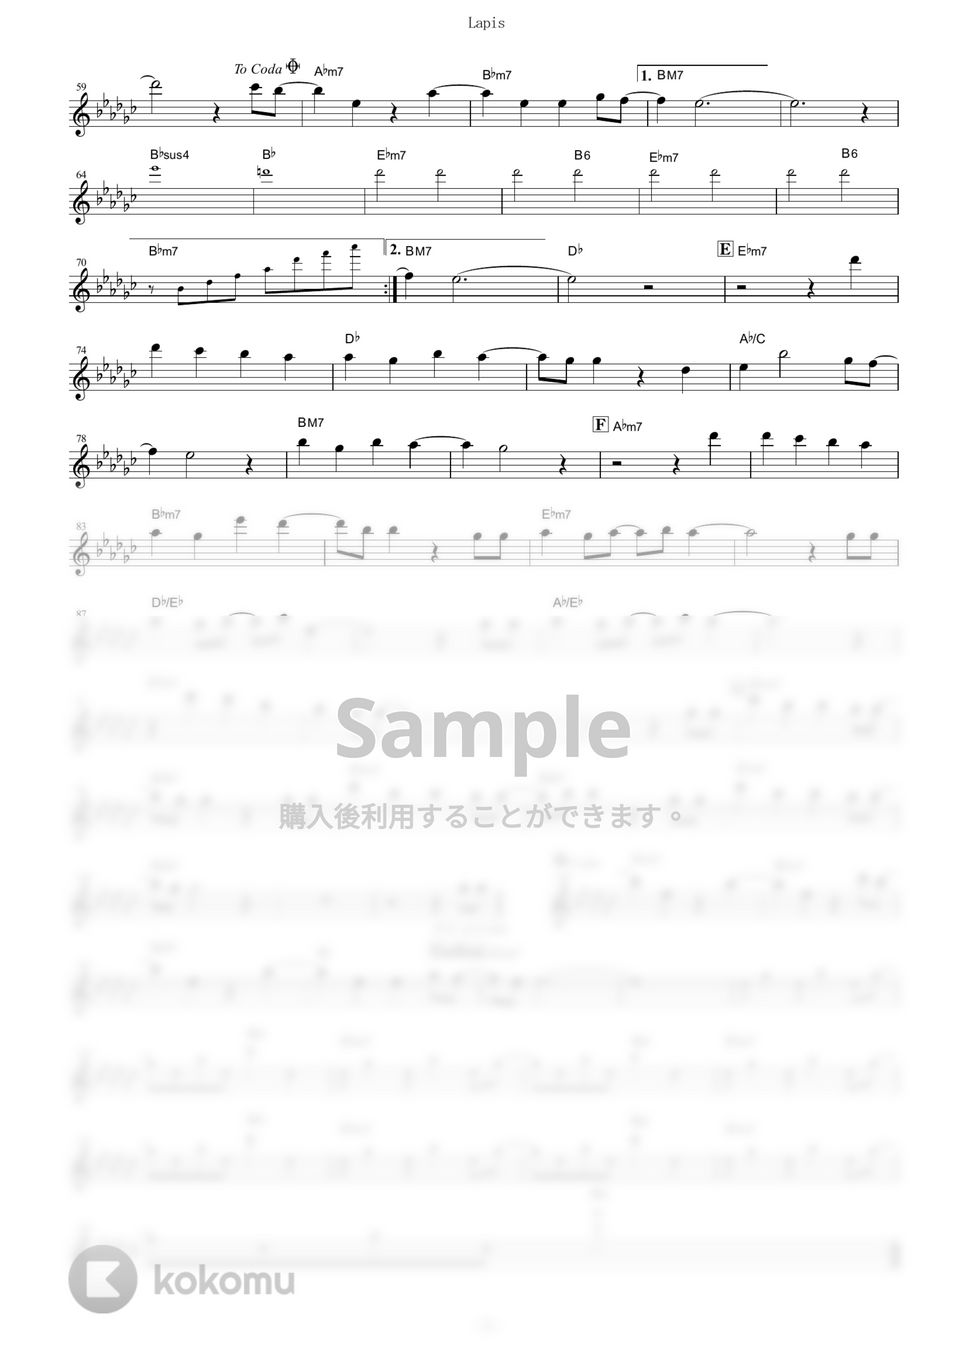 TrySail - Lapis (『マギアレコード 魔法少女まどか☆マギカ外伝 2nd SEASON -覚醒前夜-』 / in C) by muta-sax